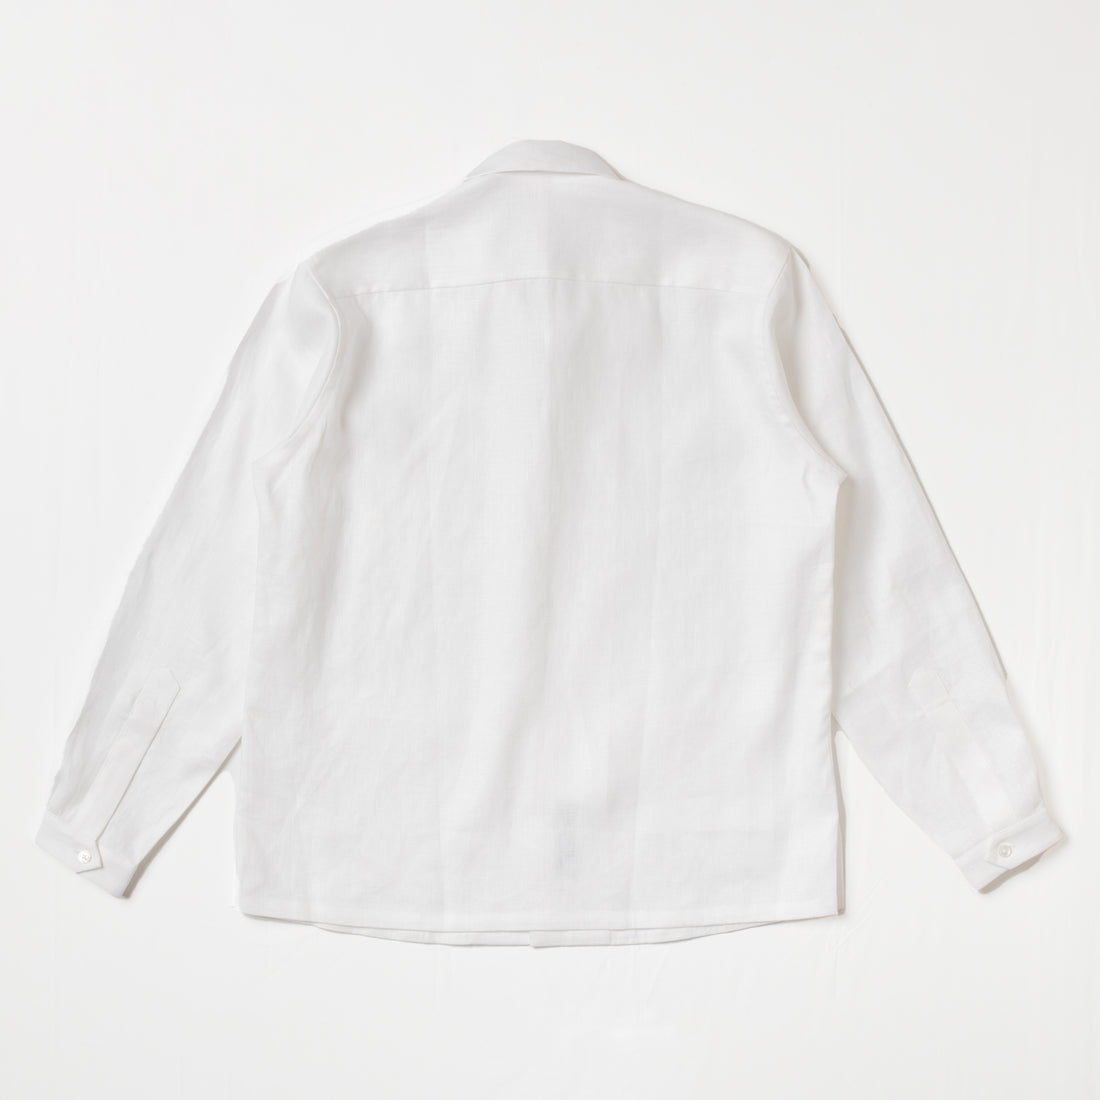 Bryceland's Cabana Shirt White